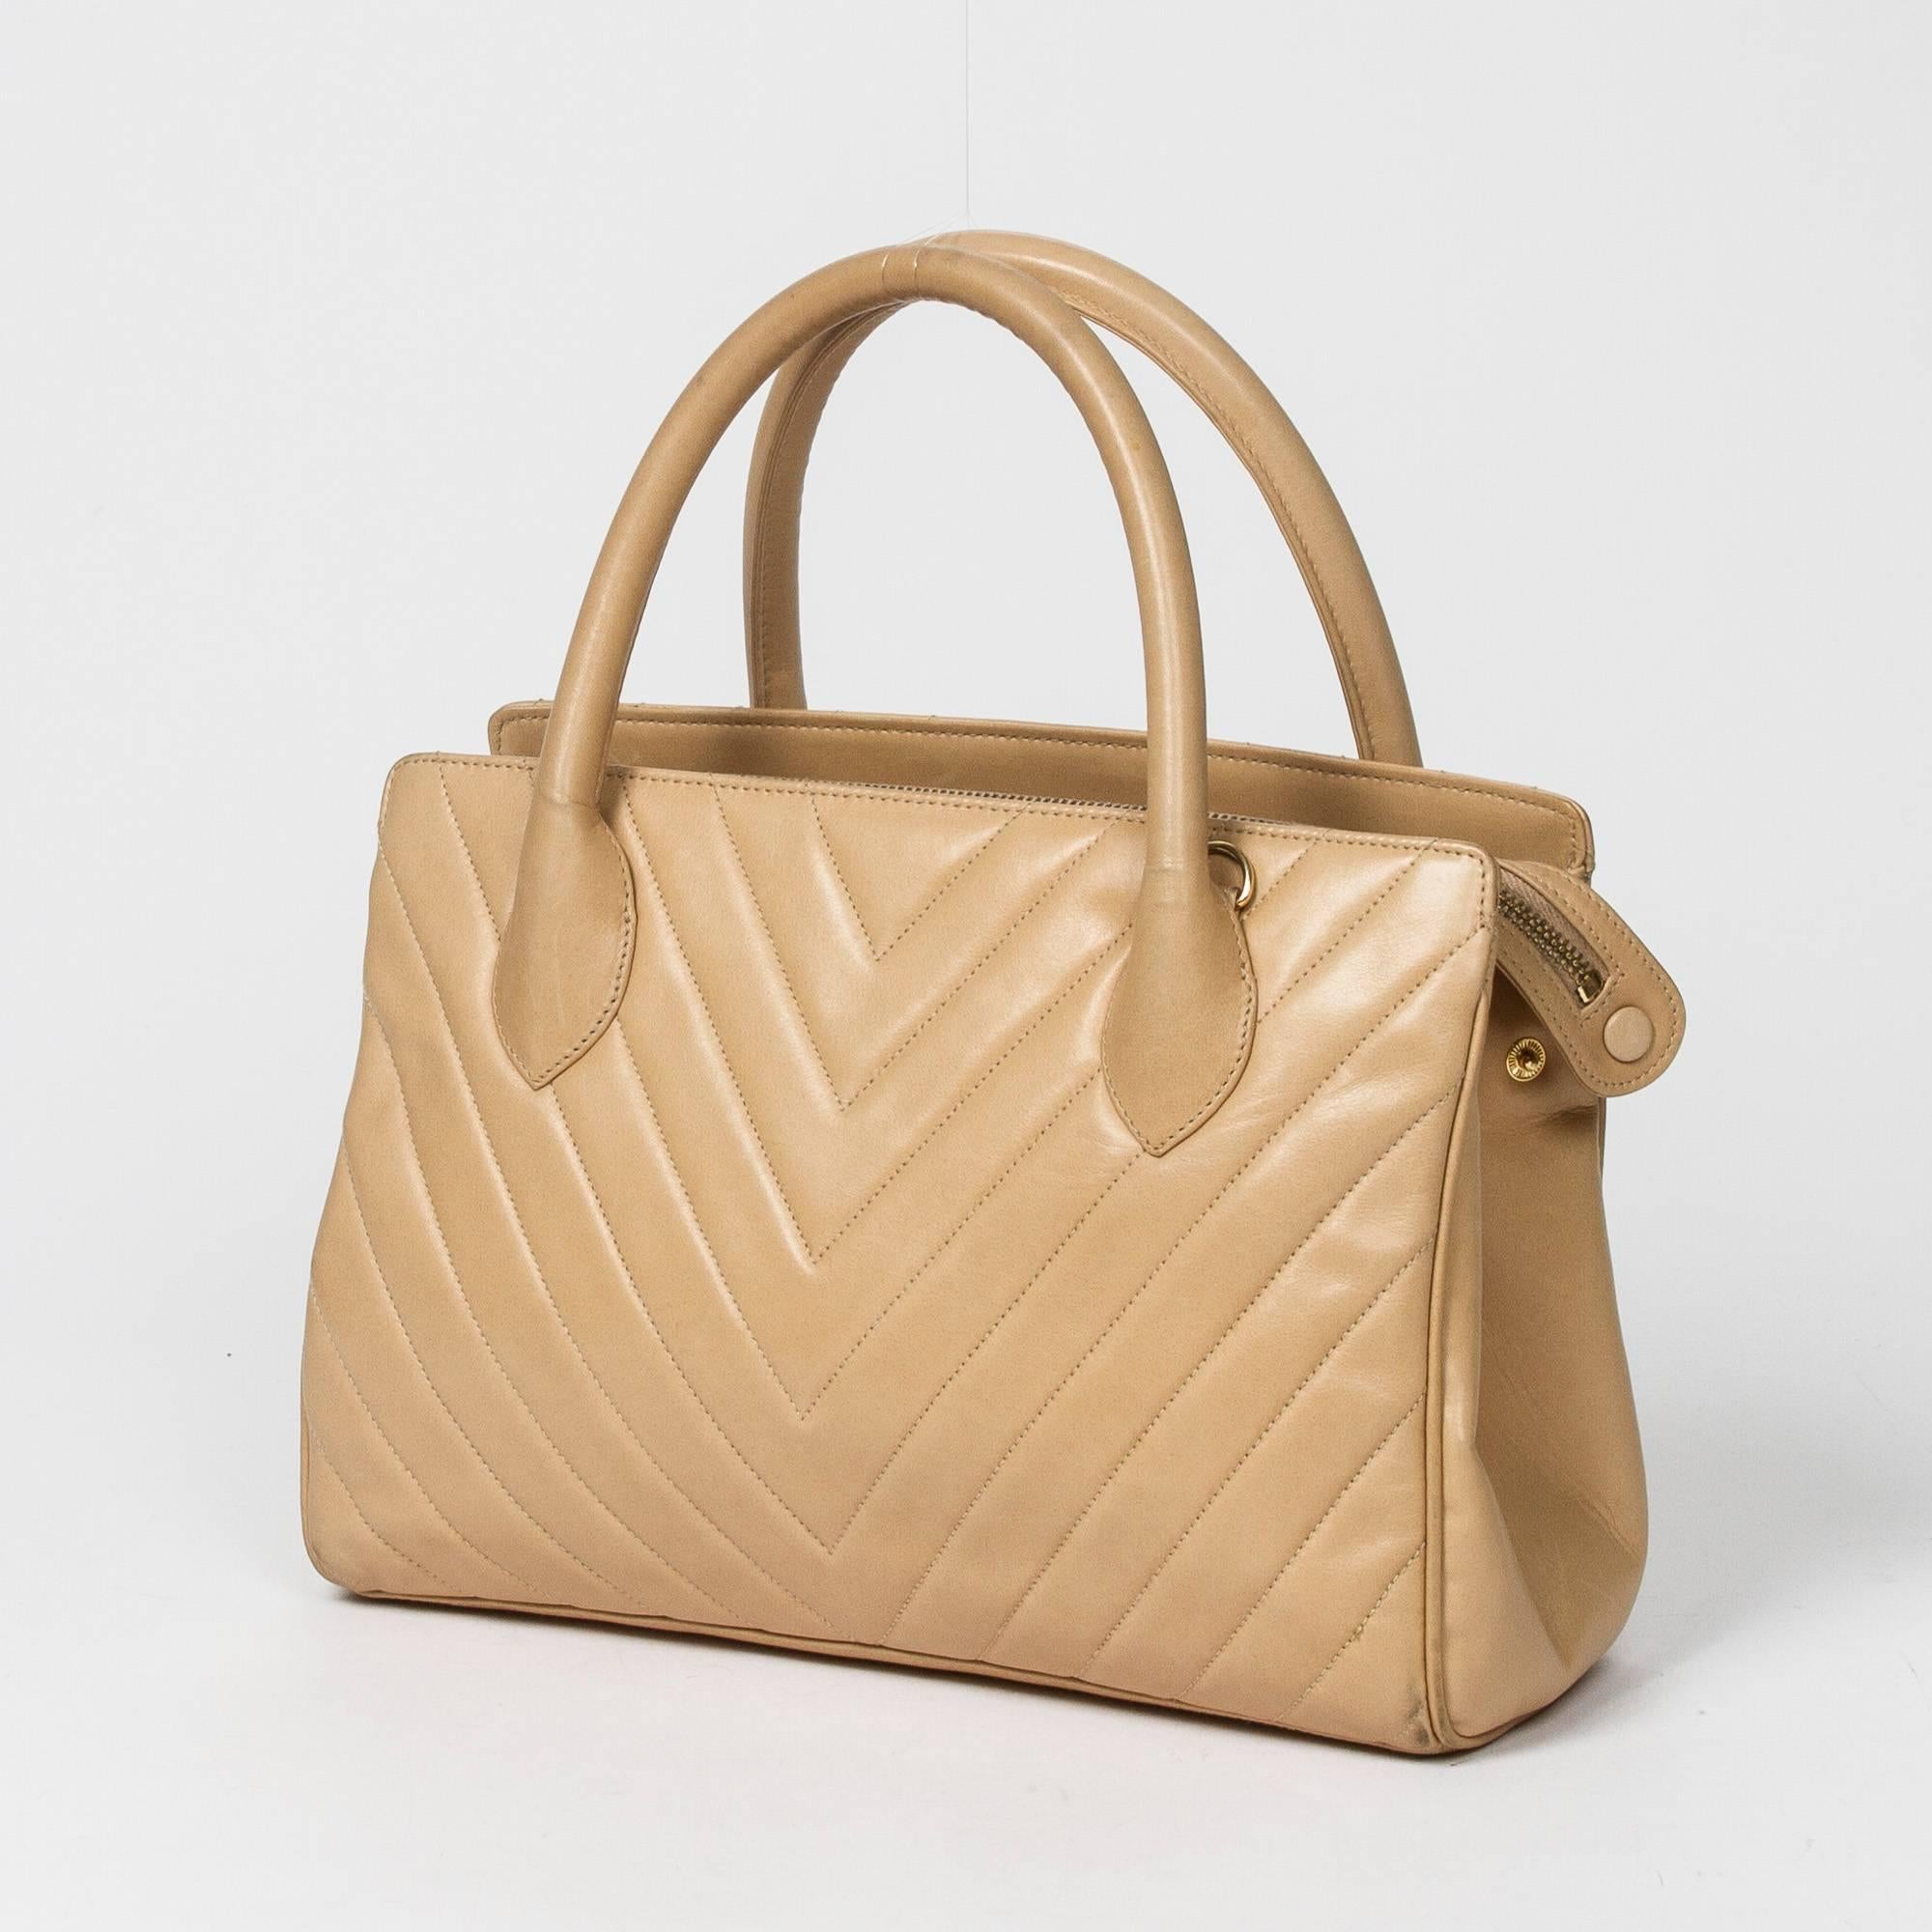 Chanel Handbag Beige Leather. Excellent condition